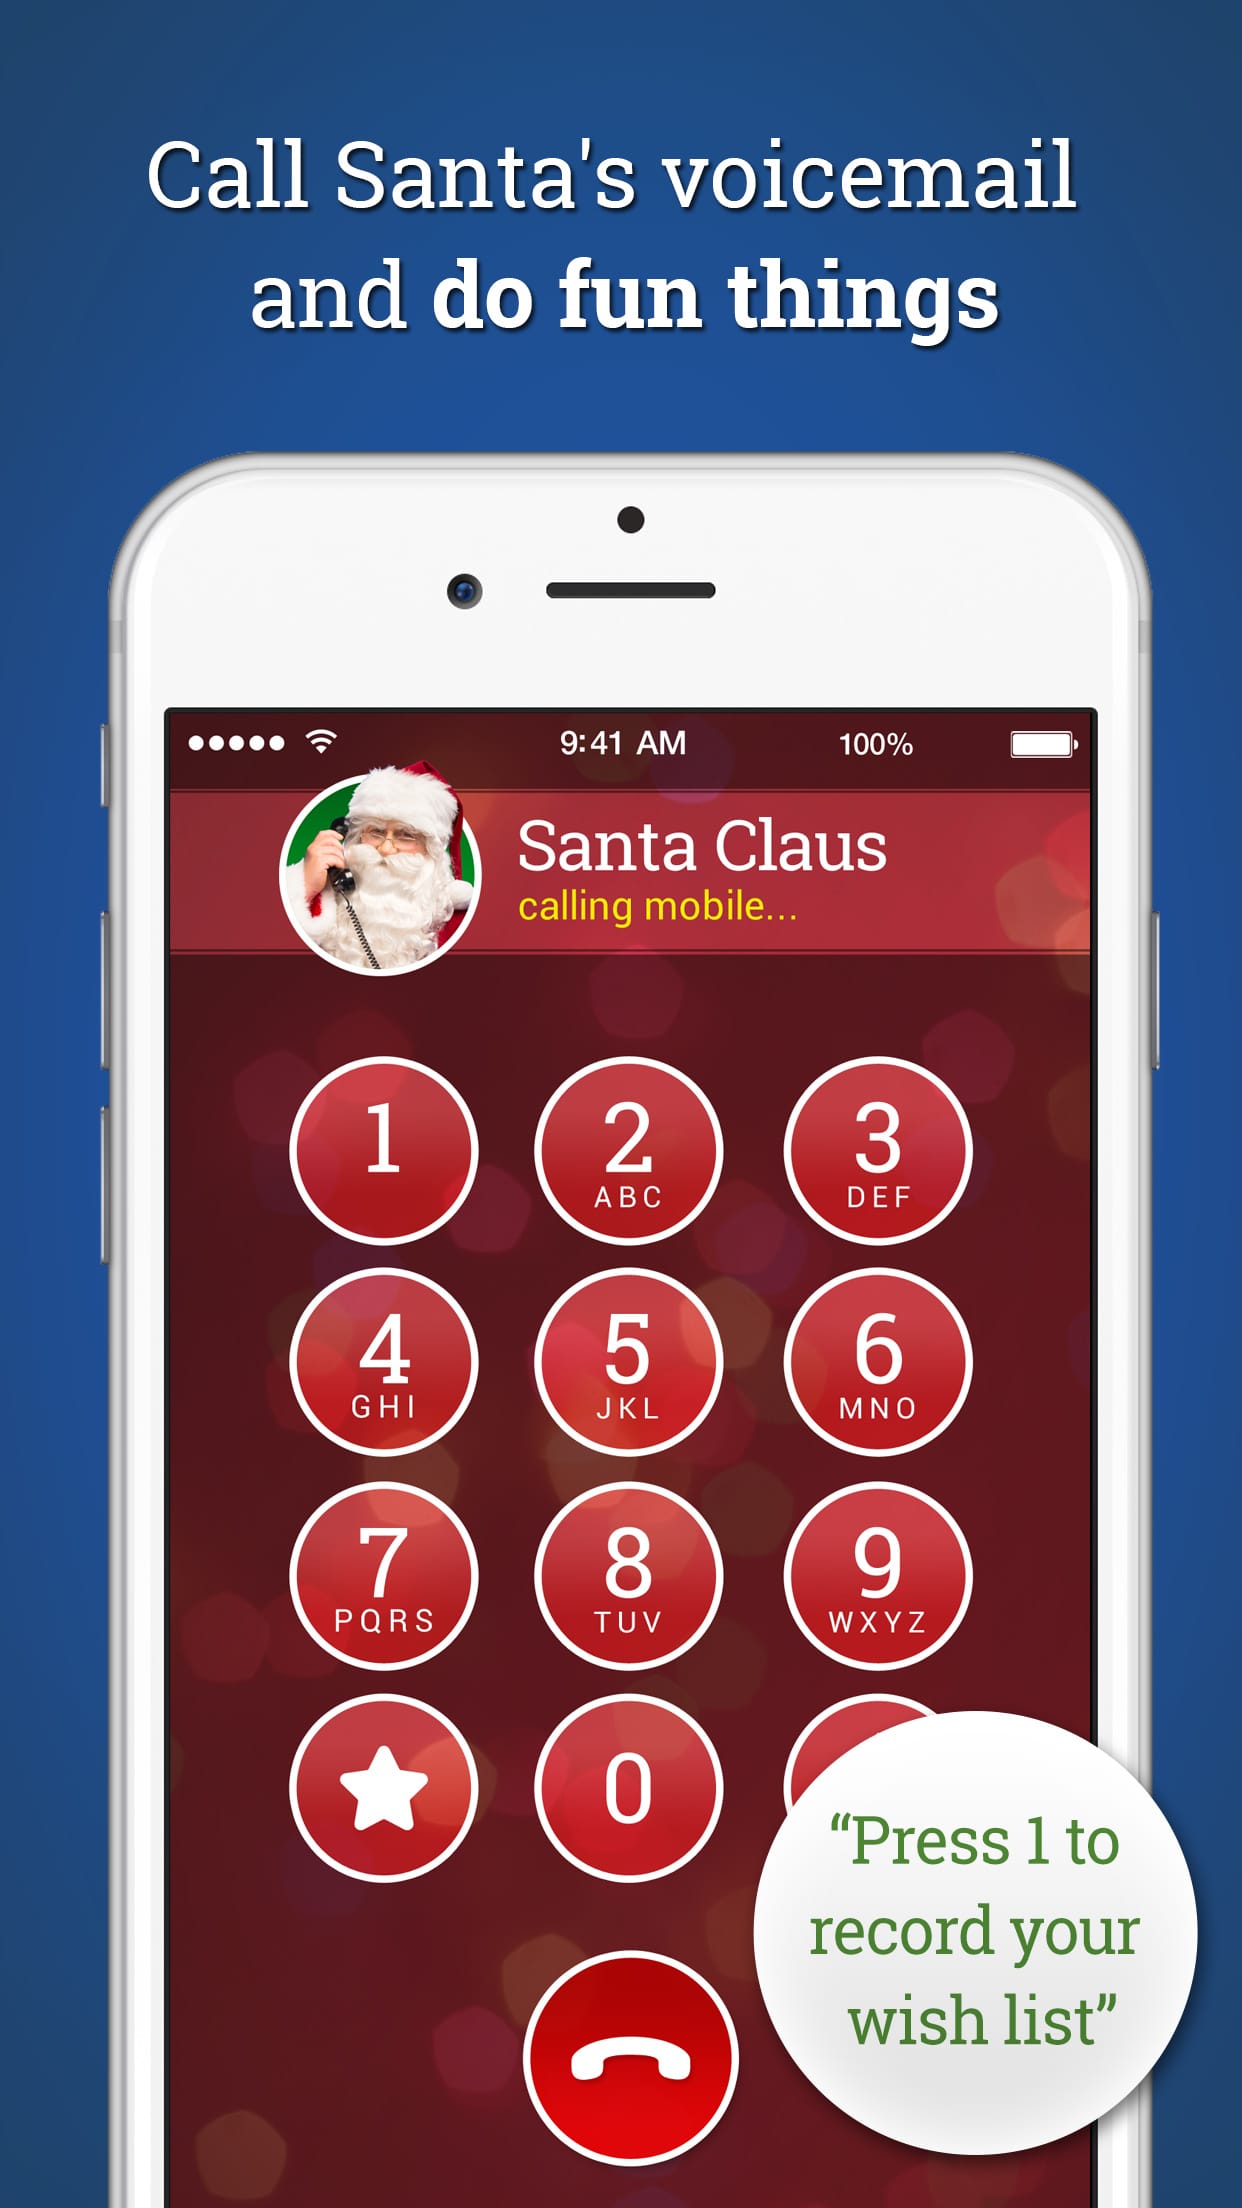 phone number to call santa claus